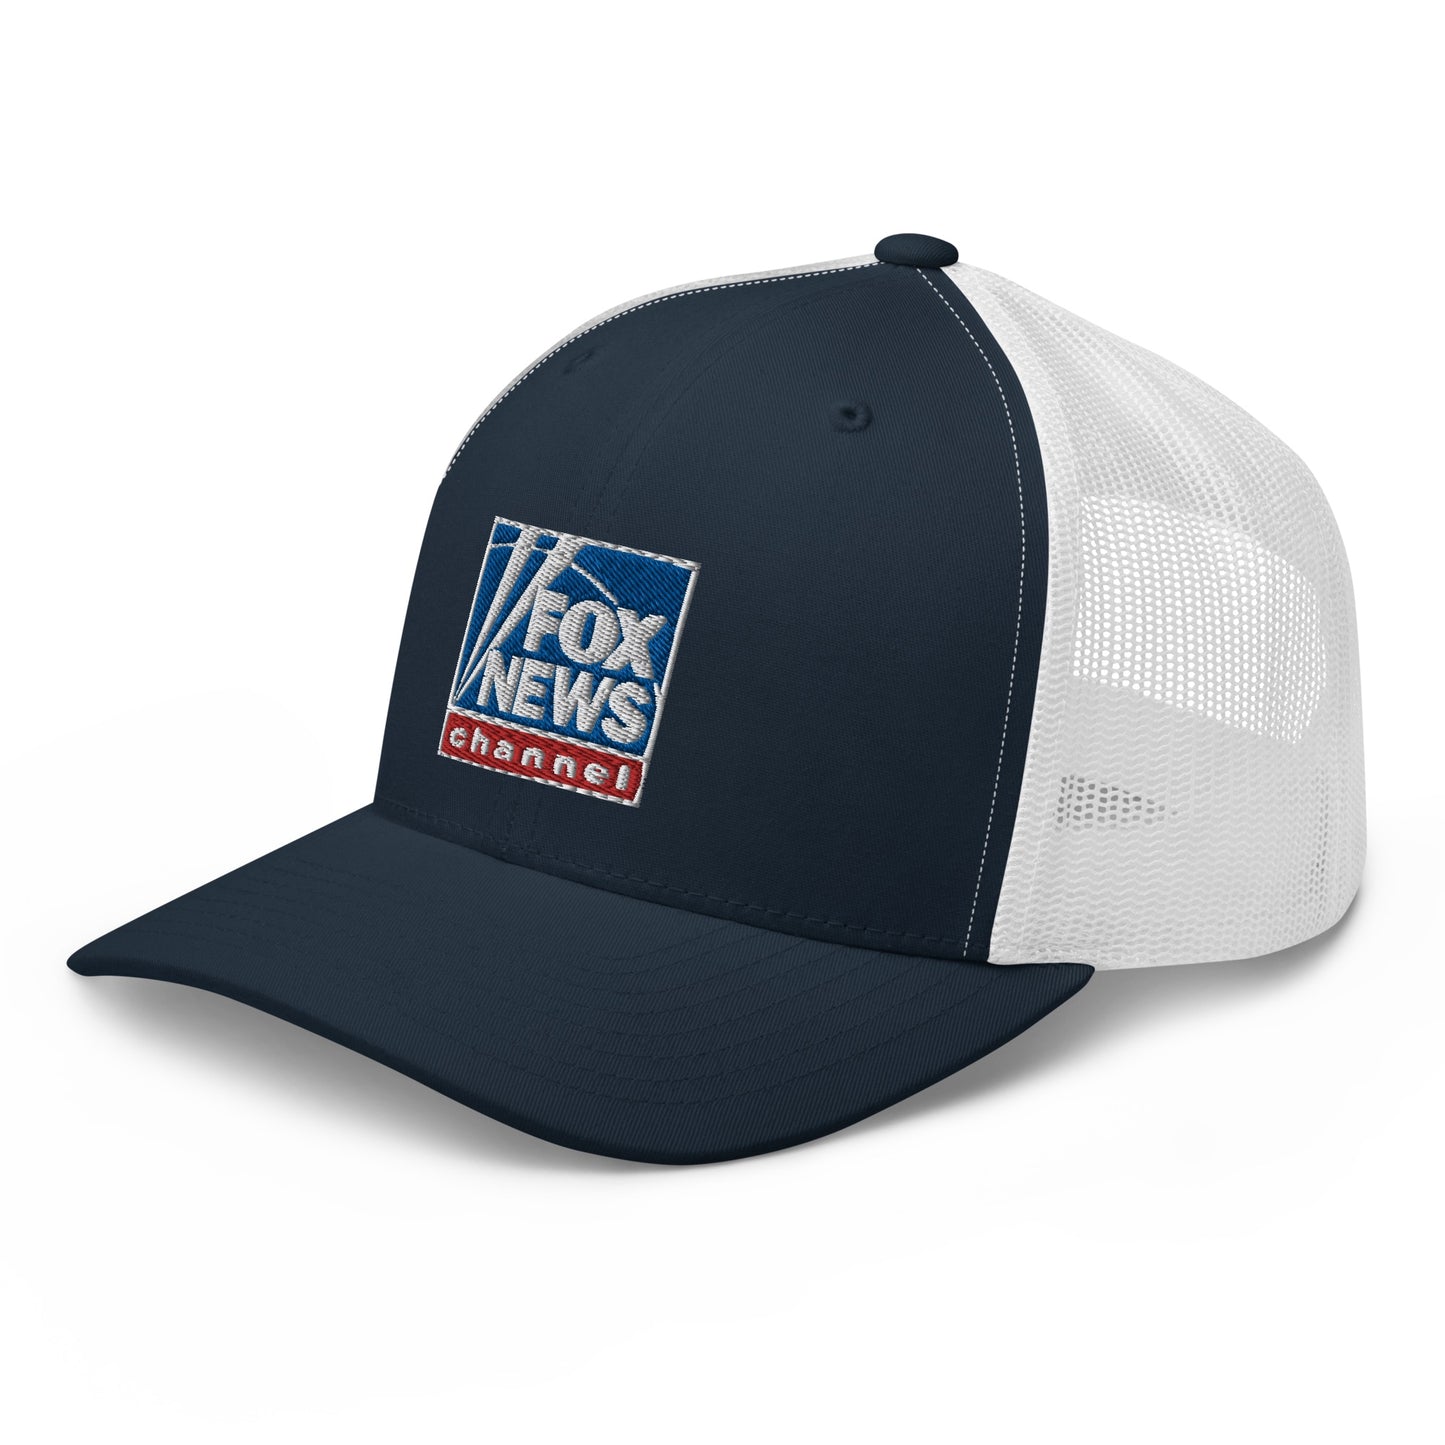 Fox News Logo Embroidered Retro Trucker Hat